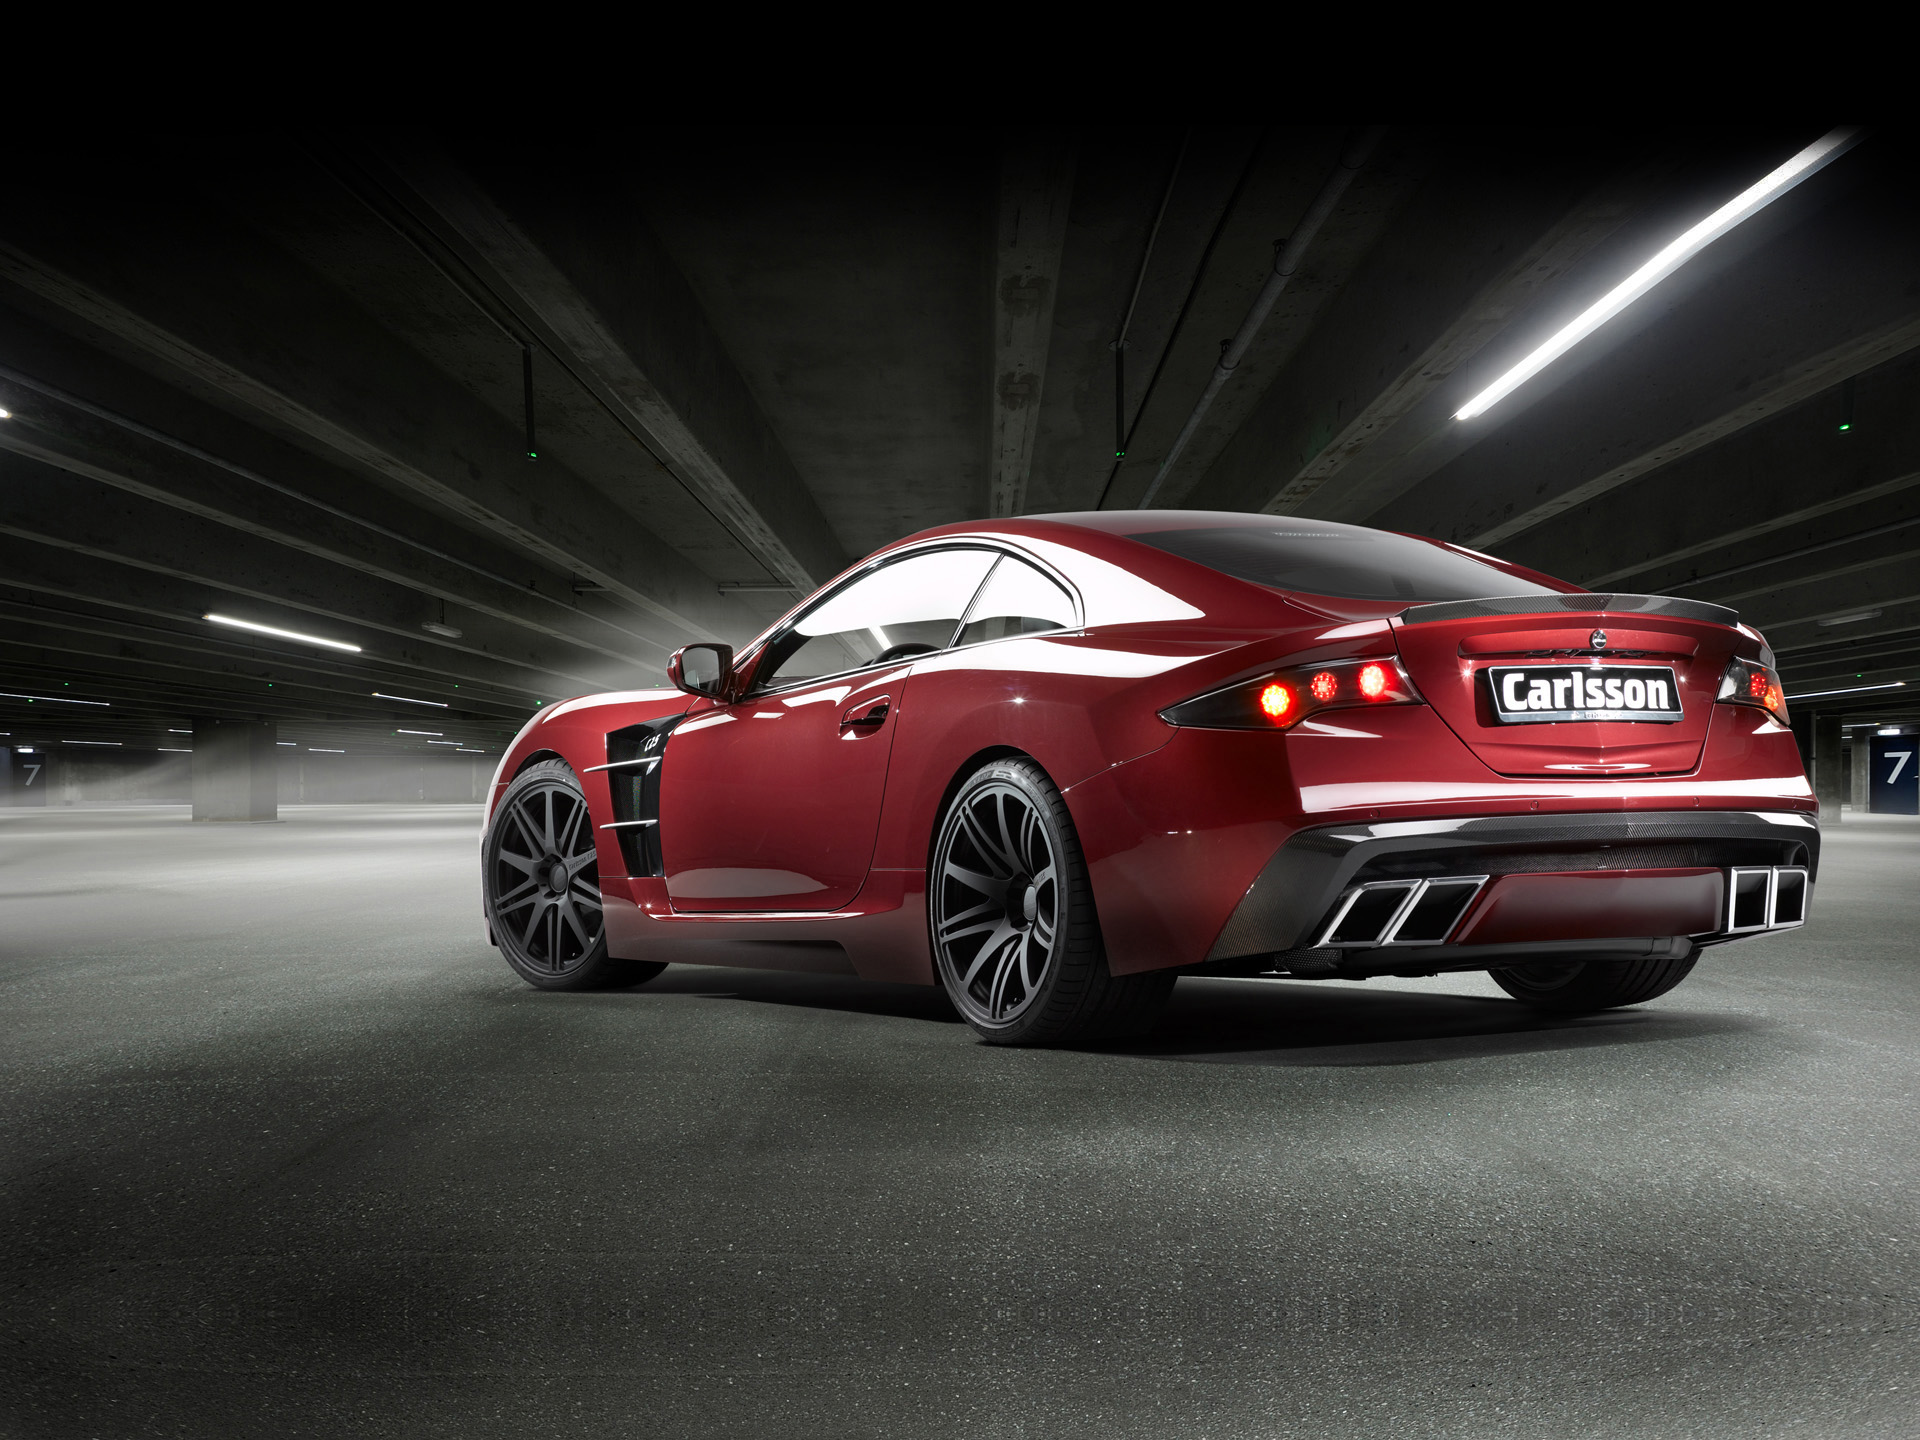  2012 Carlsson C25 Super GT Wallpaper.